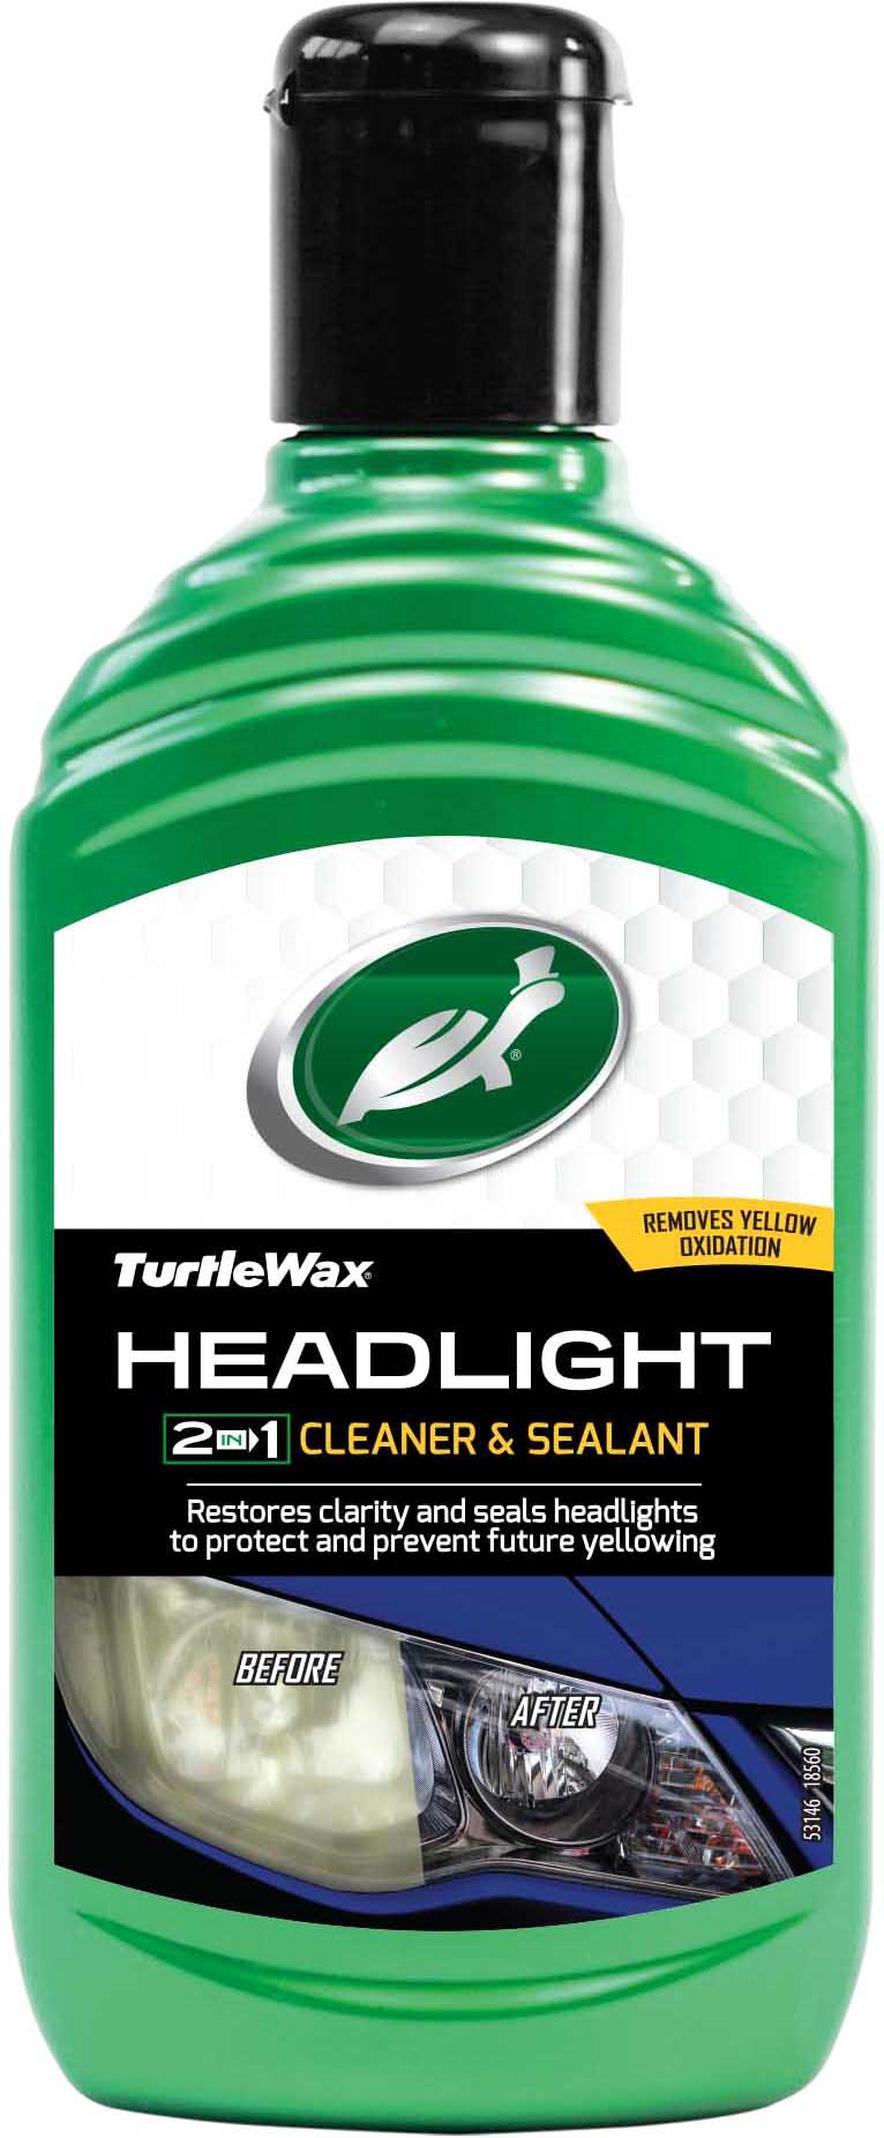 TURTLE WAX 2-IN-1 HEADLIGHT CLEANER & SEALANT 